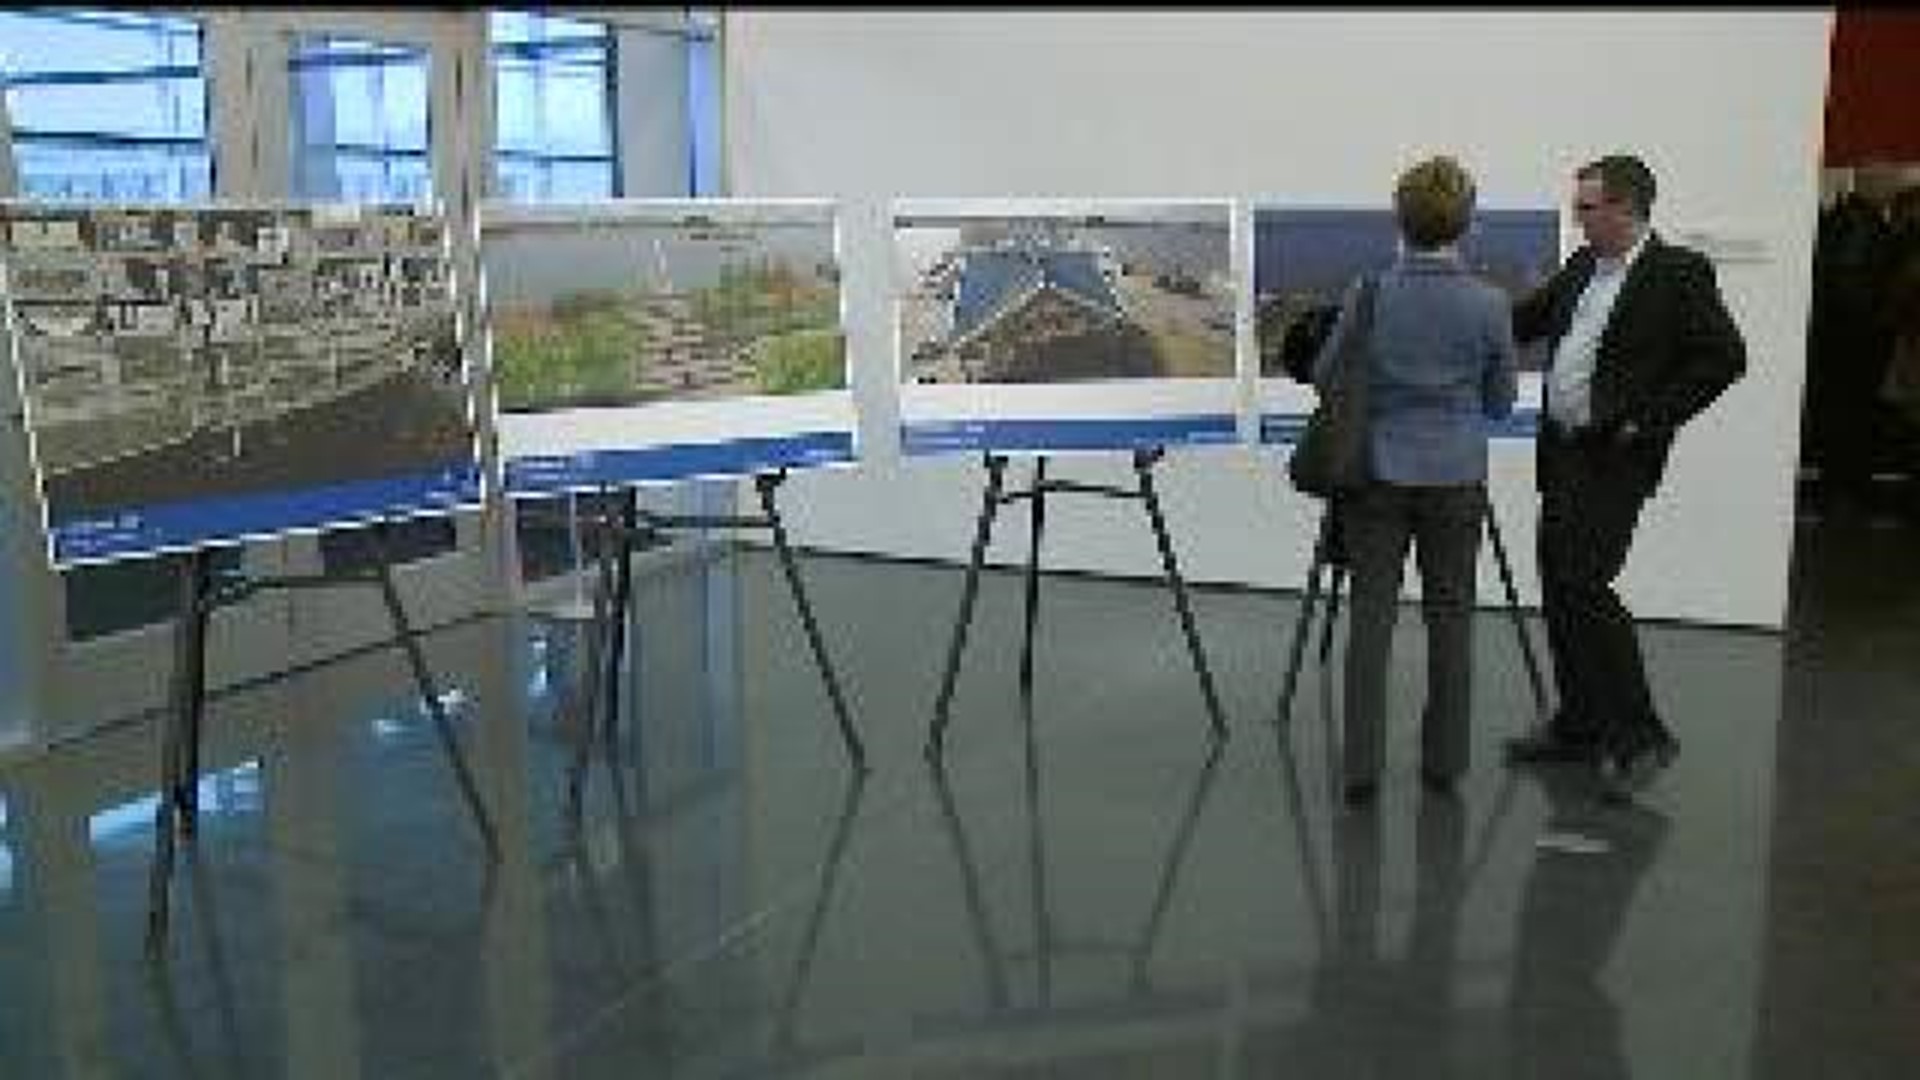 New Riverfront plans unveiled